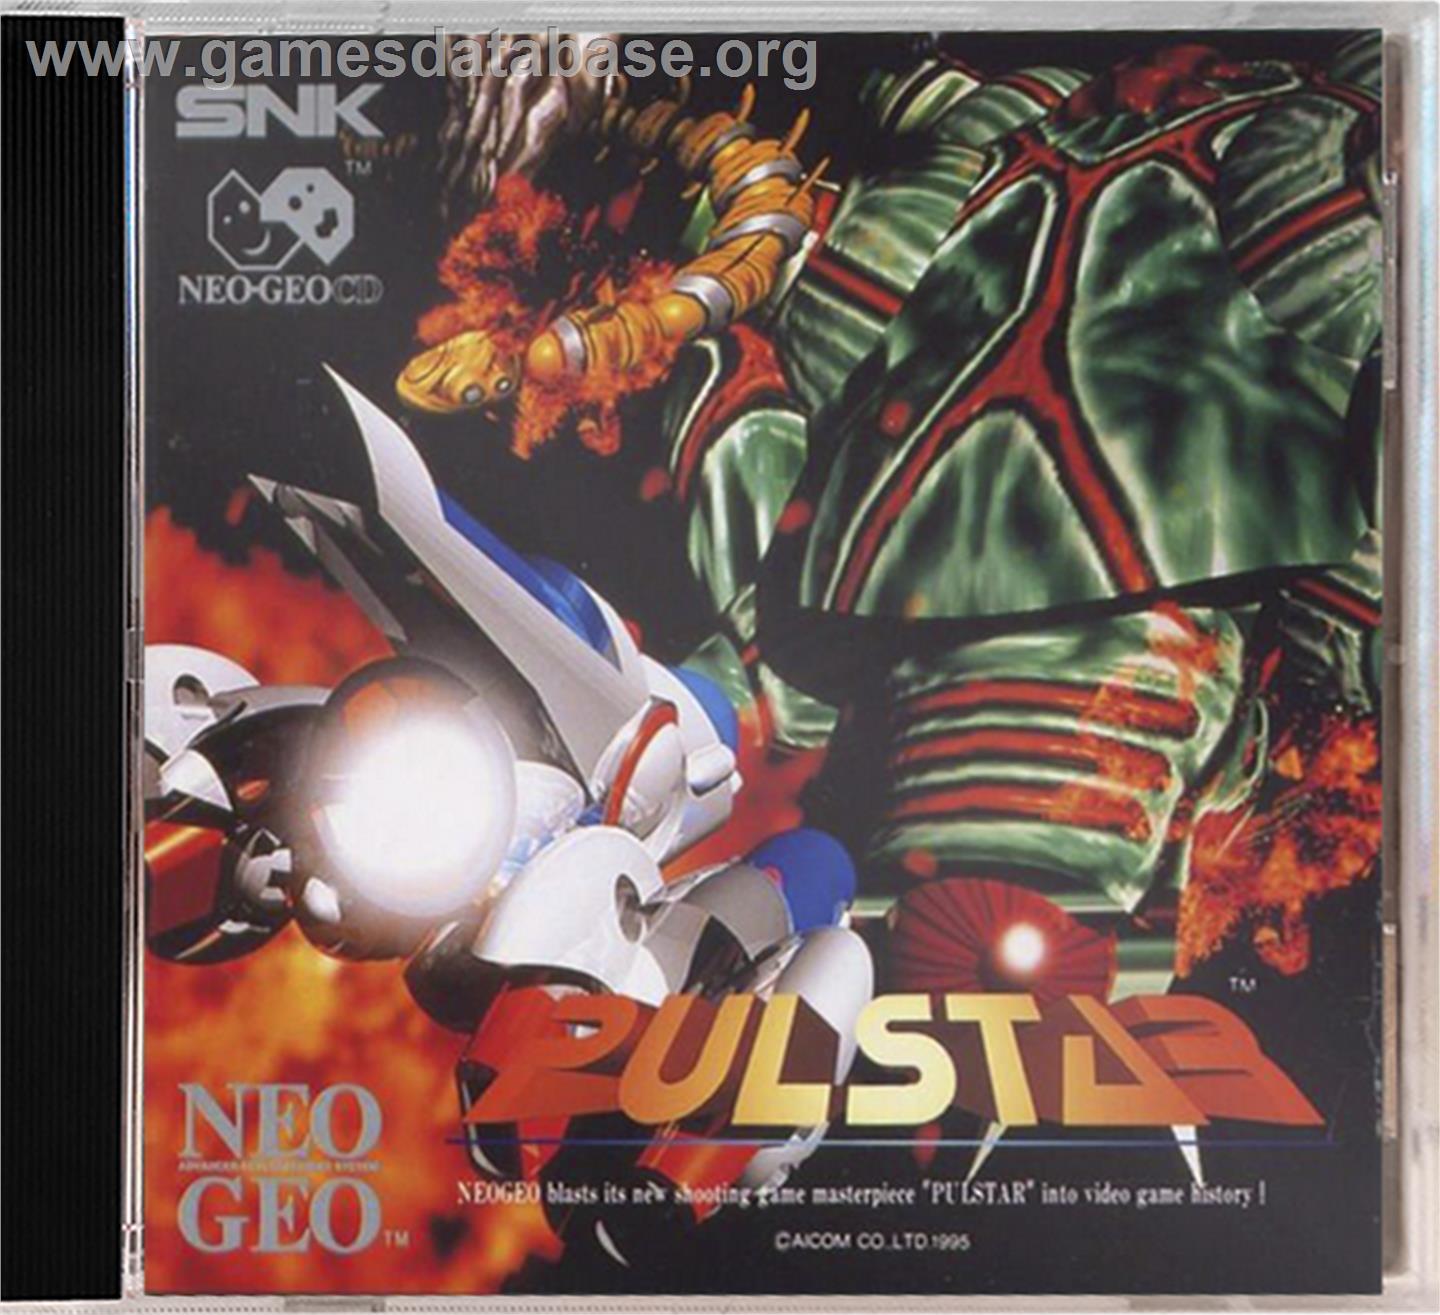 Pulstar - SNK Neo-Geo CD - Artwork - Box